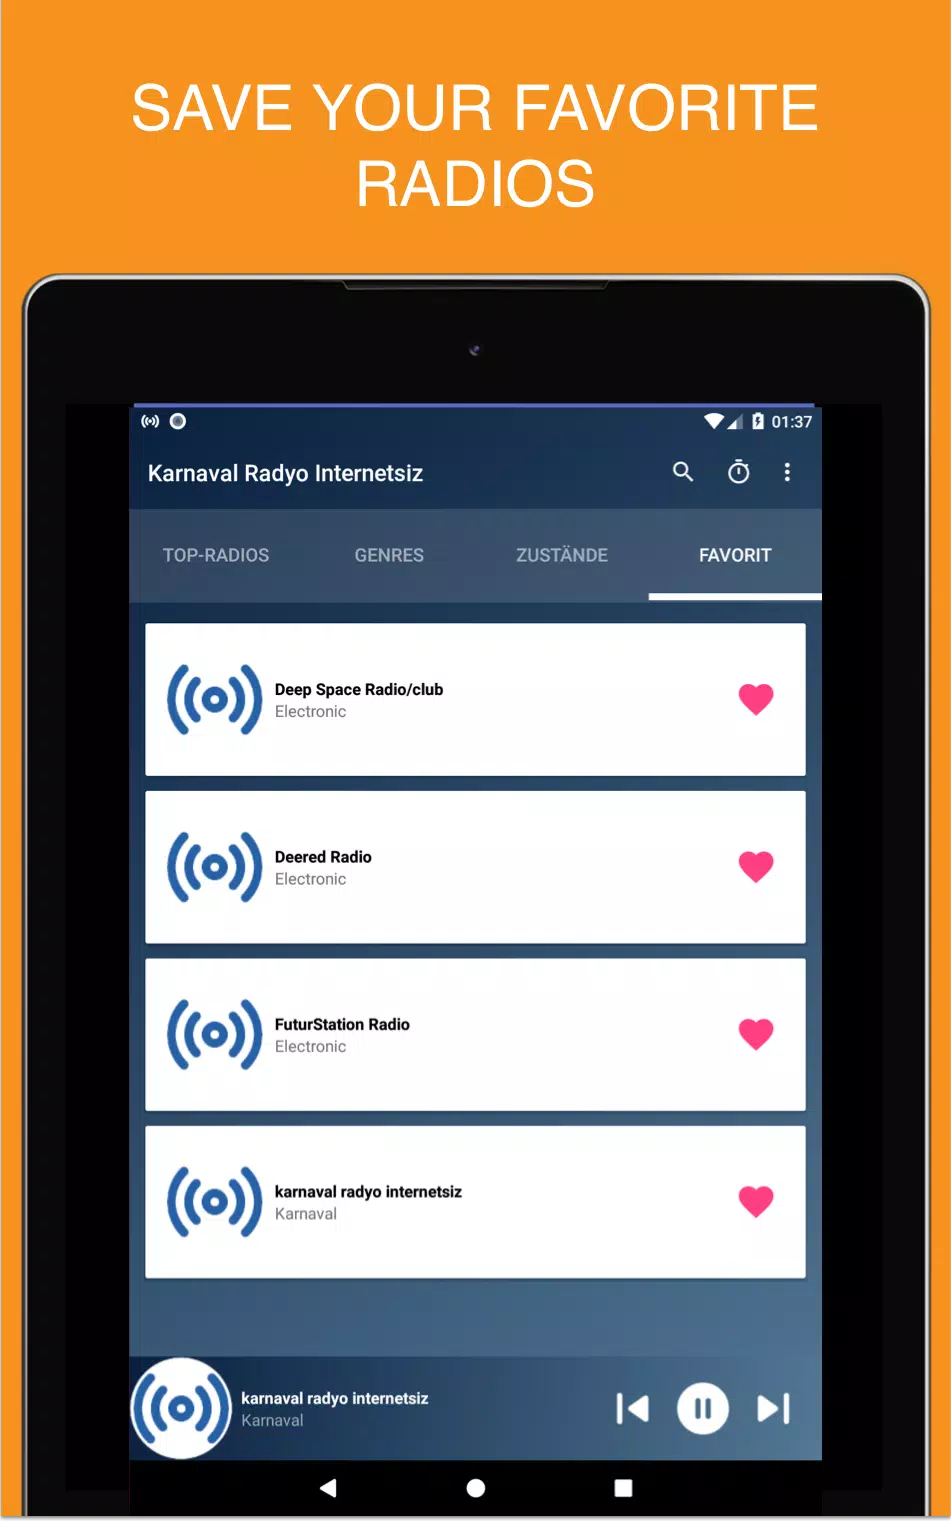 Karnaval Radyo Internetsiz App APK for Android Download